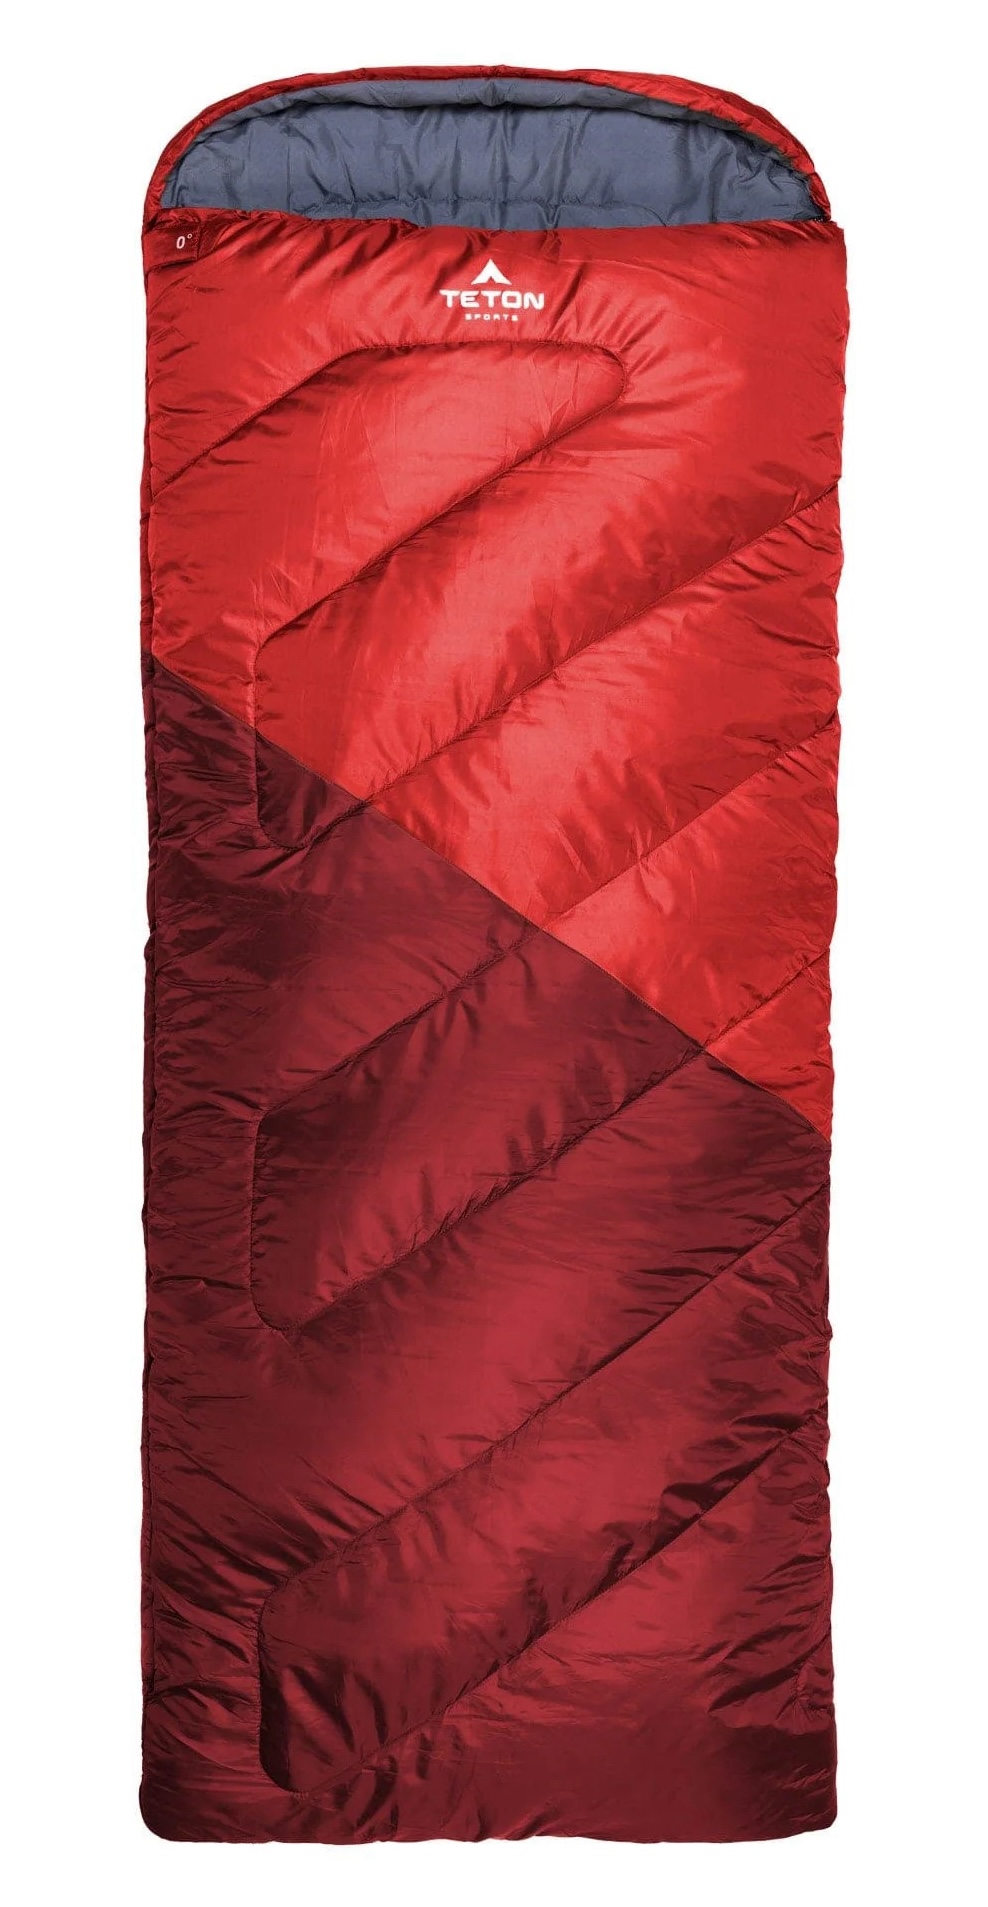 Teton Sports Celsius 0 sleeping bag